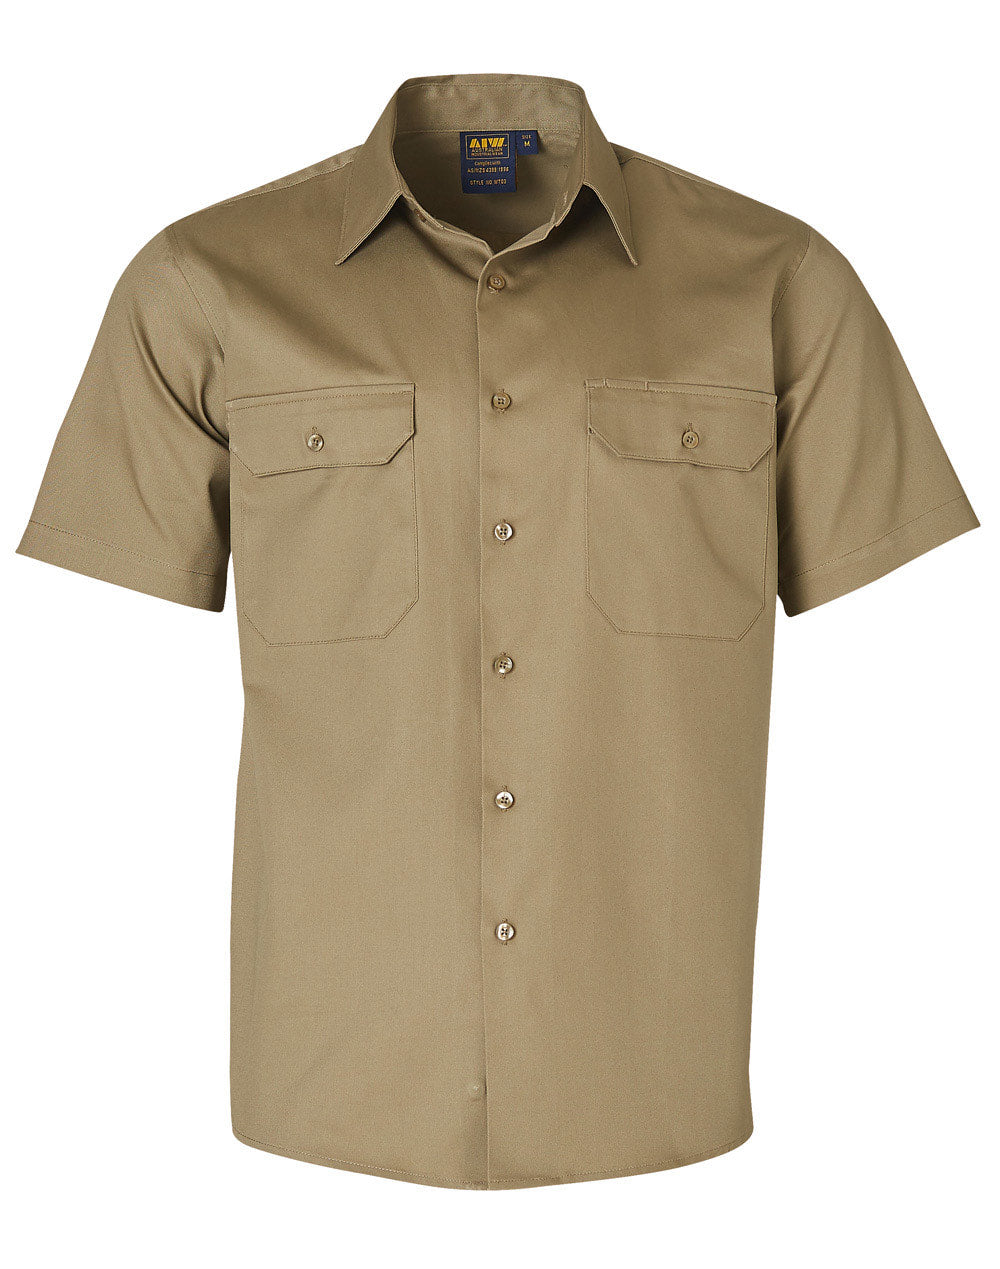 AIW WT03 Cotton Drill Short Sleeve Work Shirt